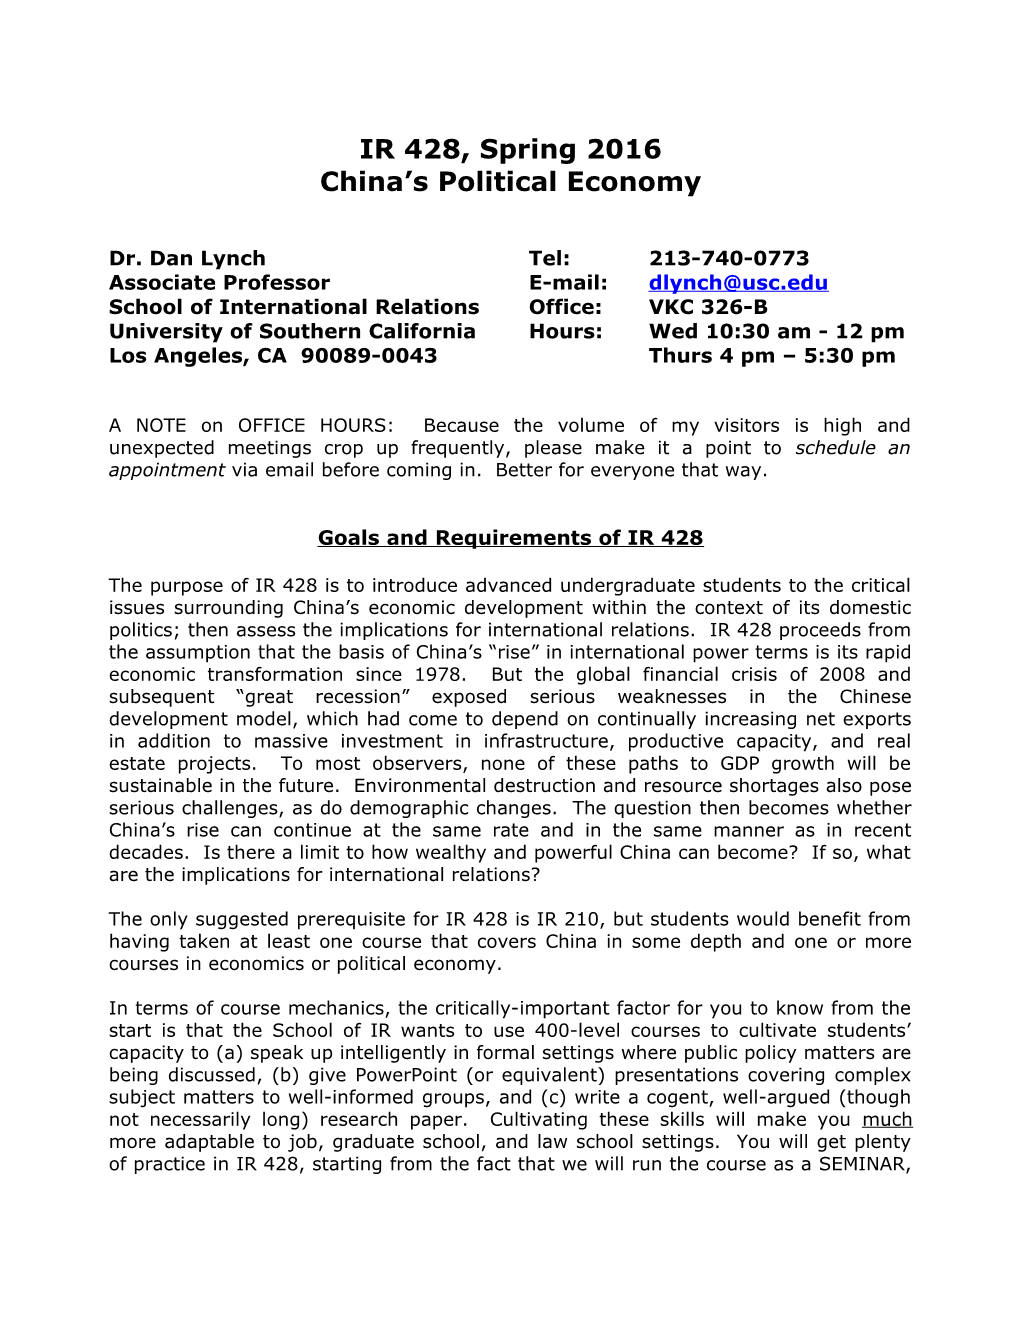 China S Political Economy